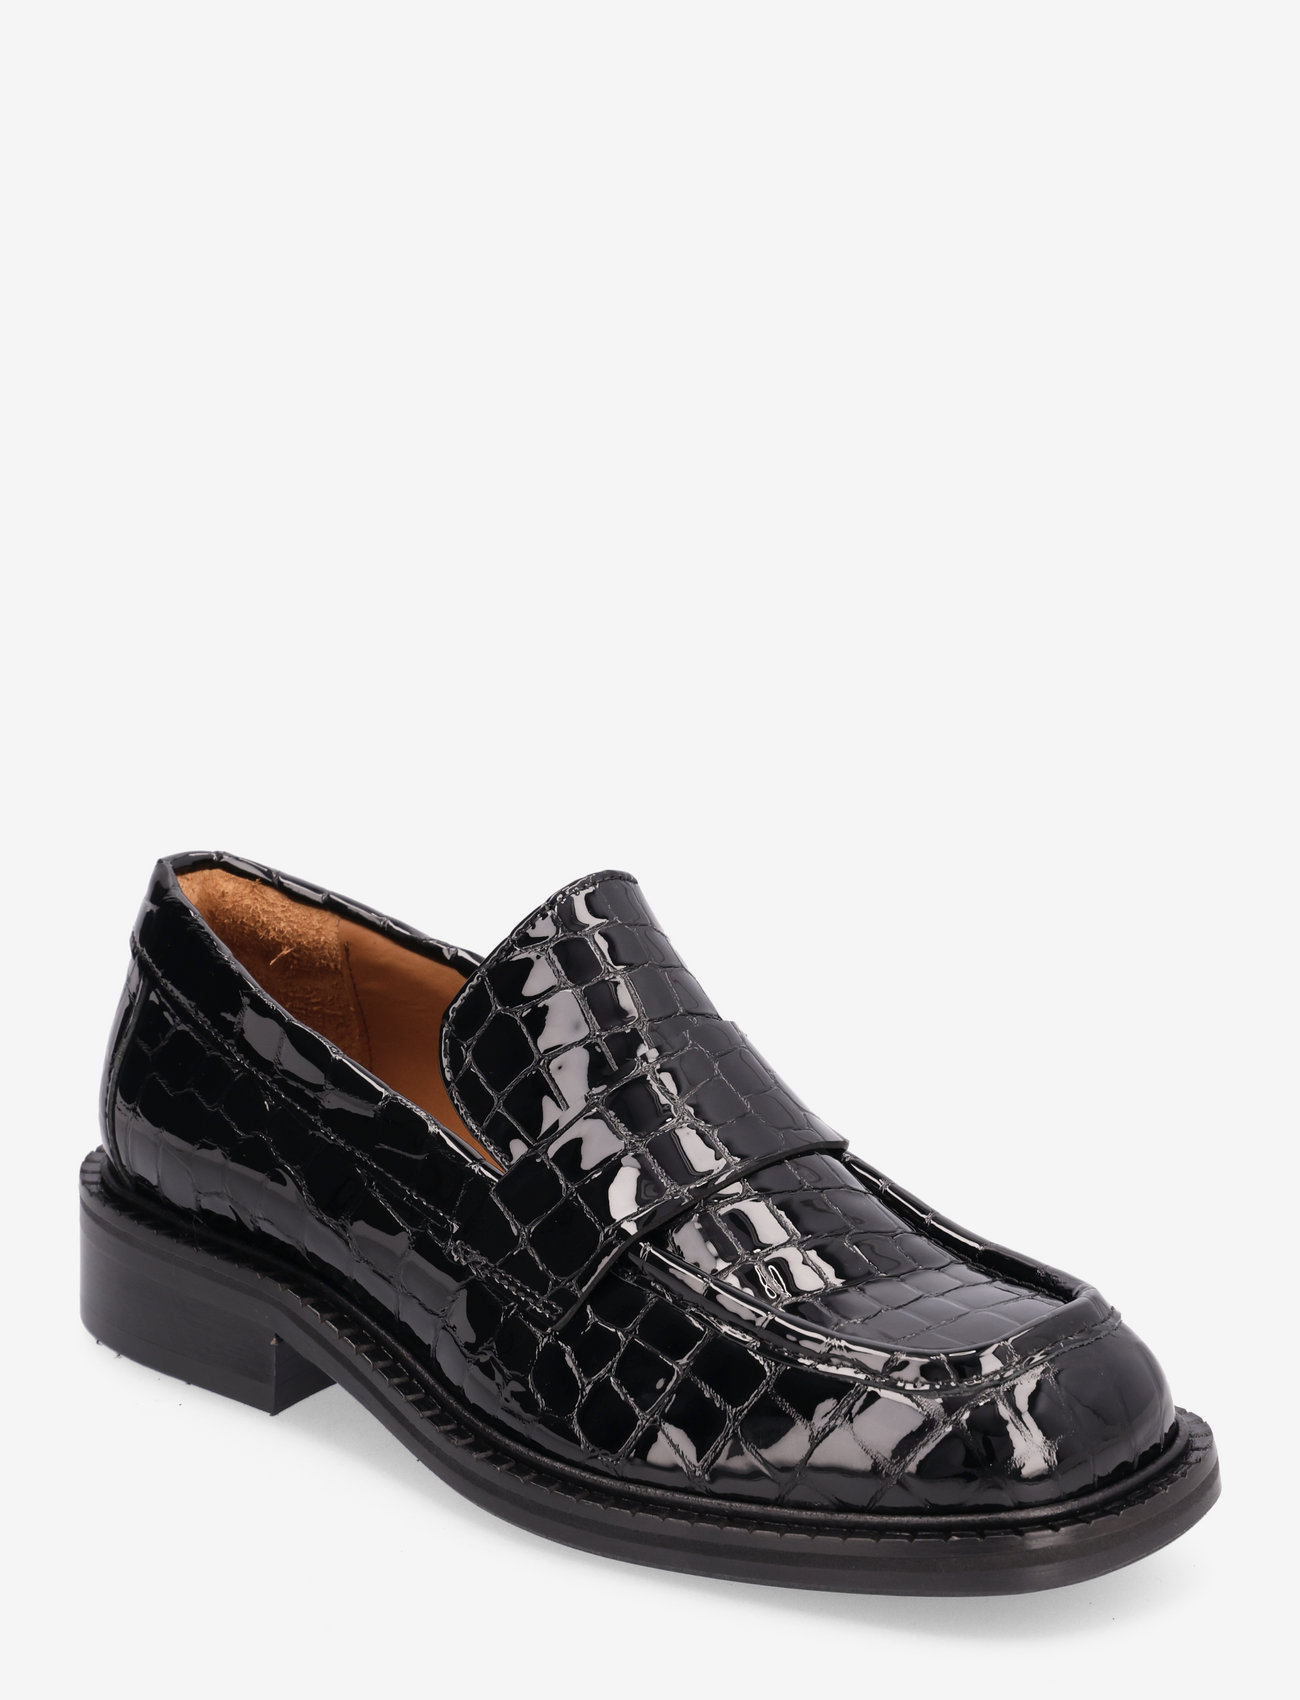 Billi Bi - Shoes - birthday gifts - black croco patent - 0